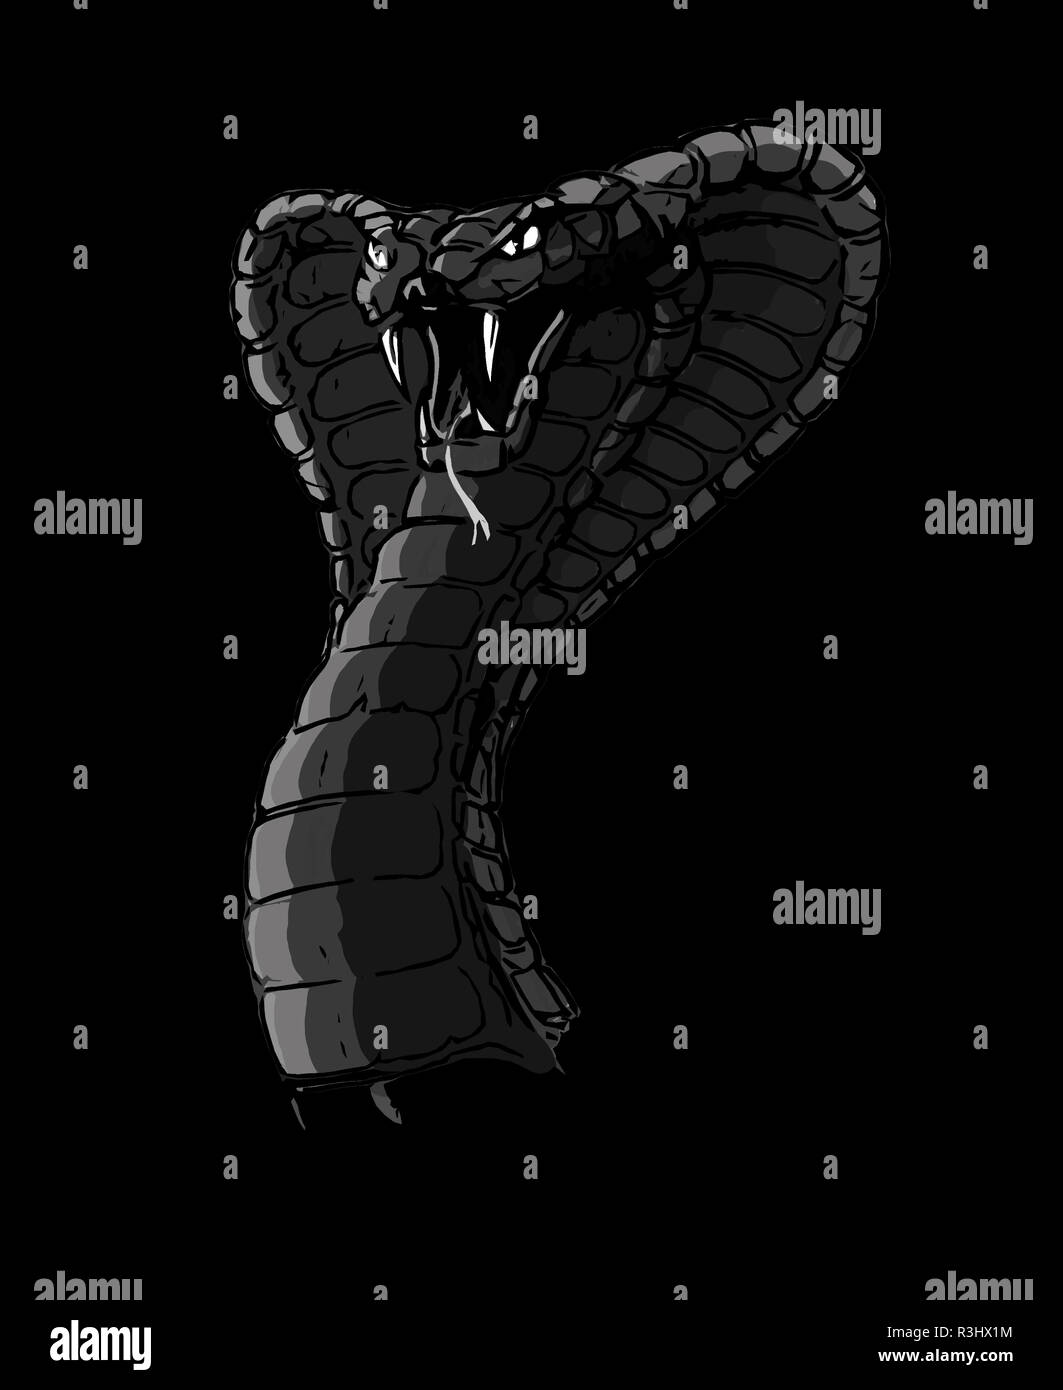 impending kobra,illustration Stock Photo